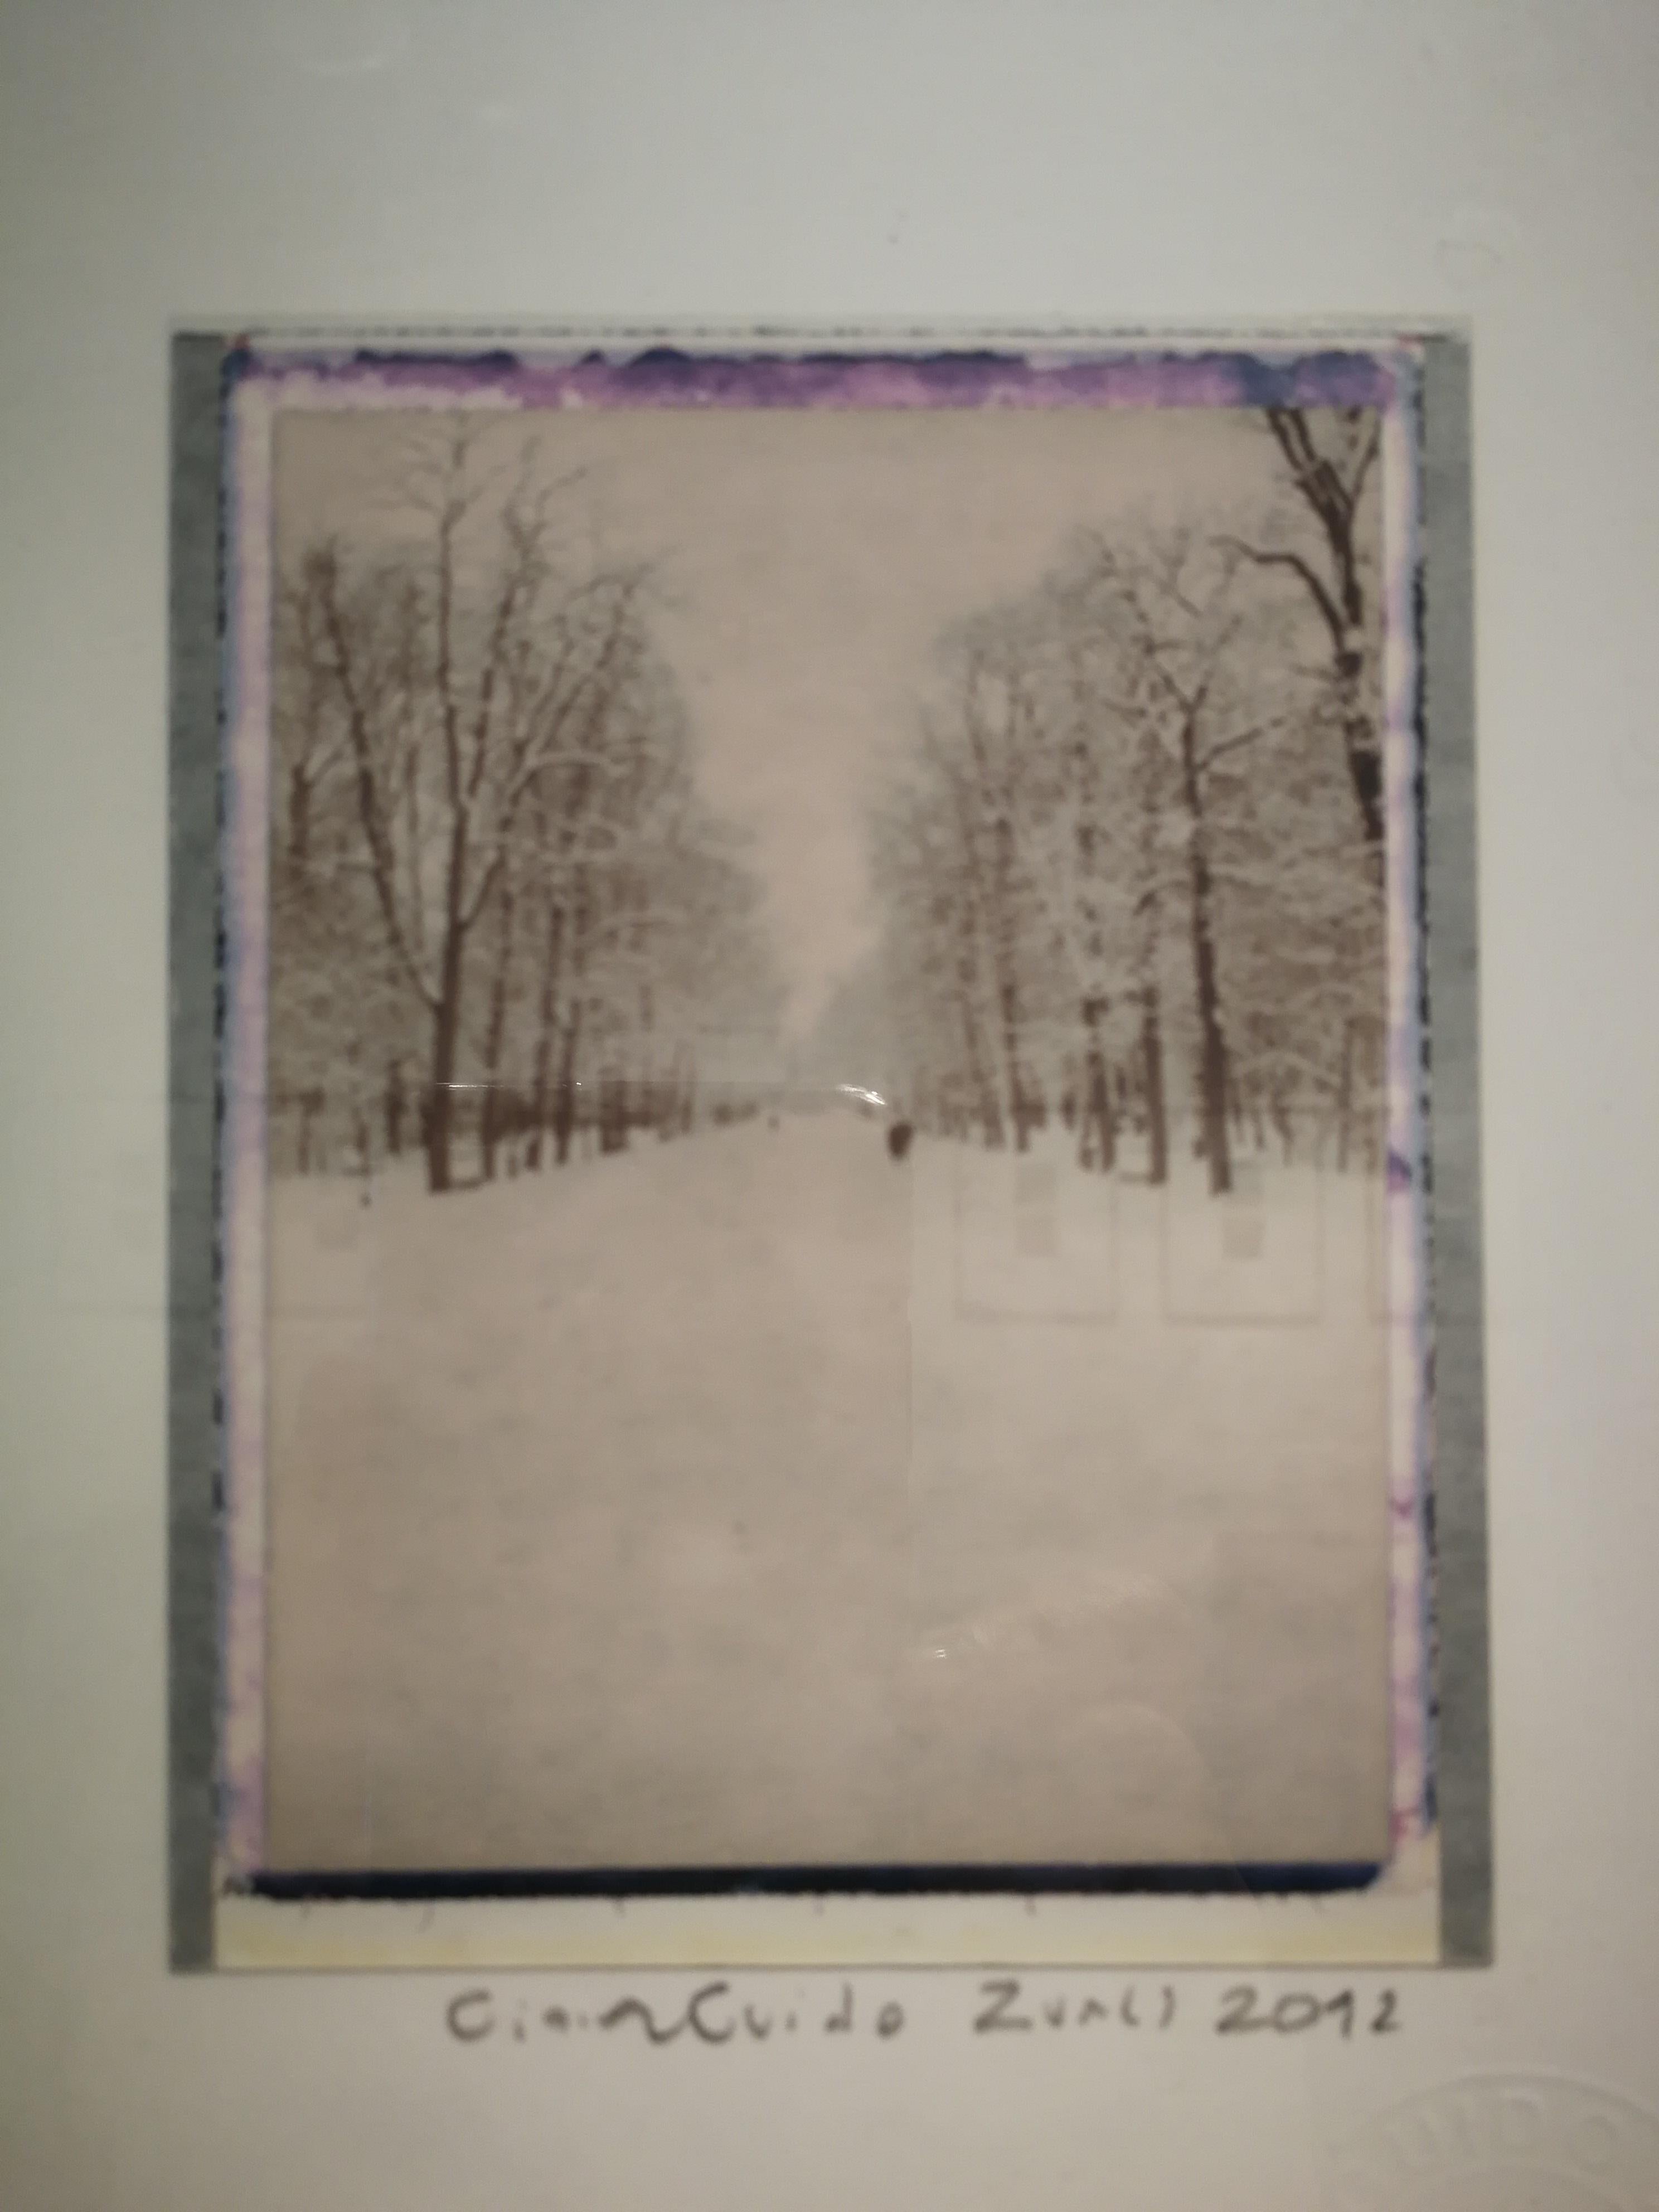 Parma , nevicata , 2012 - Gian Guido Zurli Polaroid Photography Landscape For Sale 1